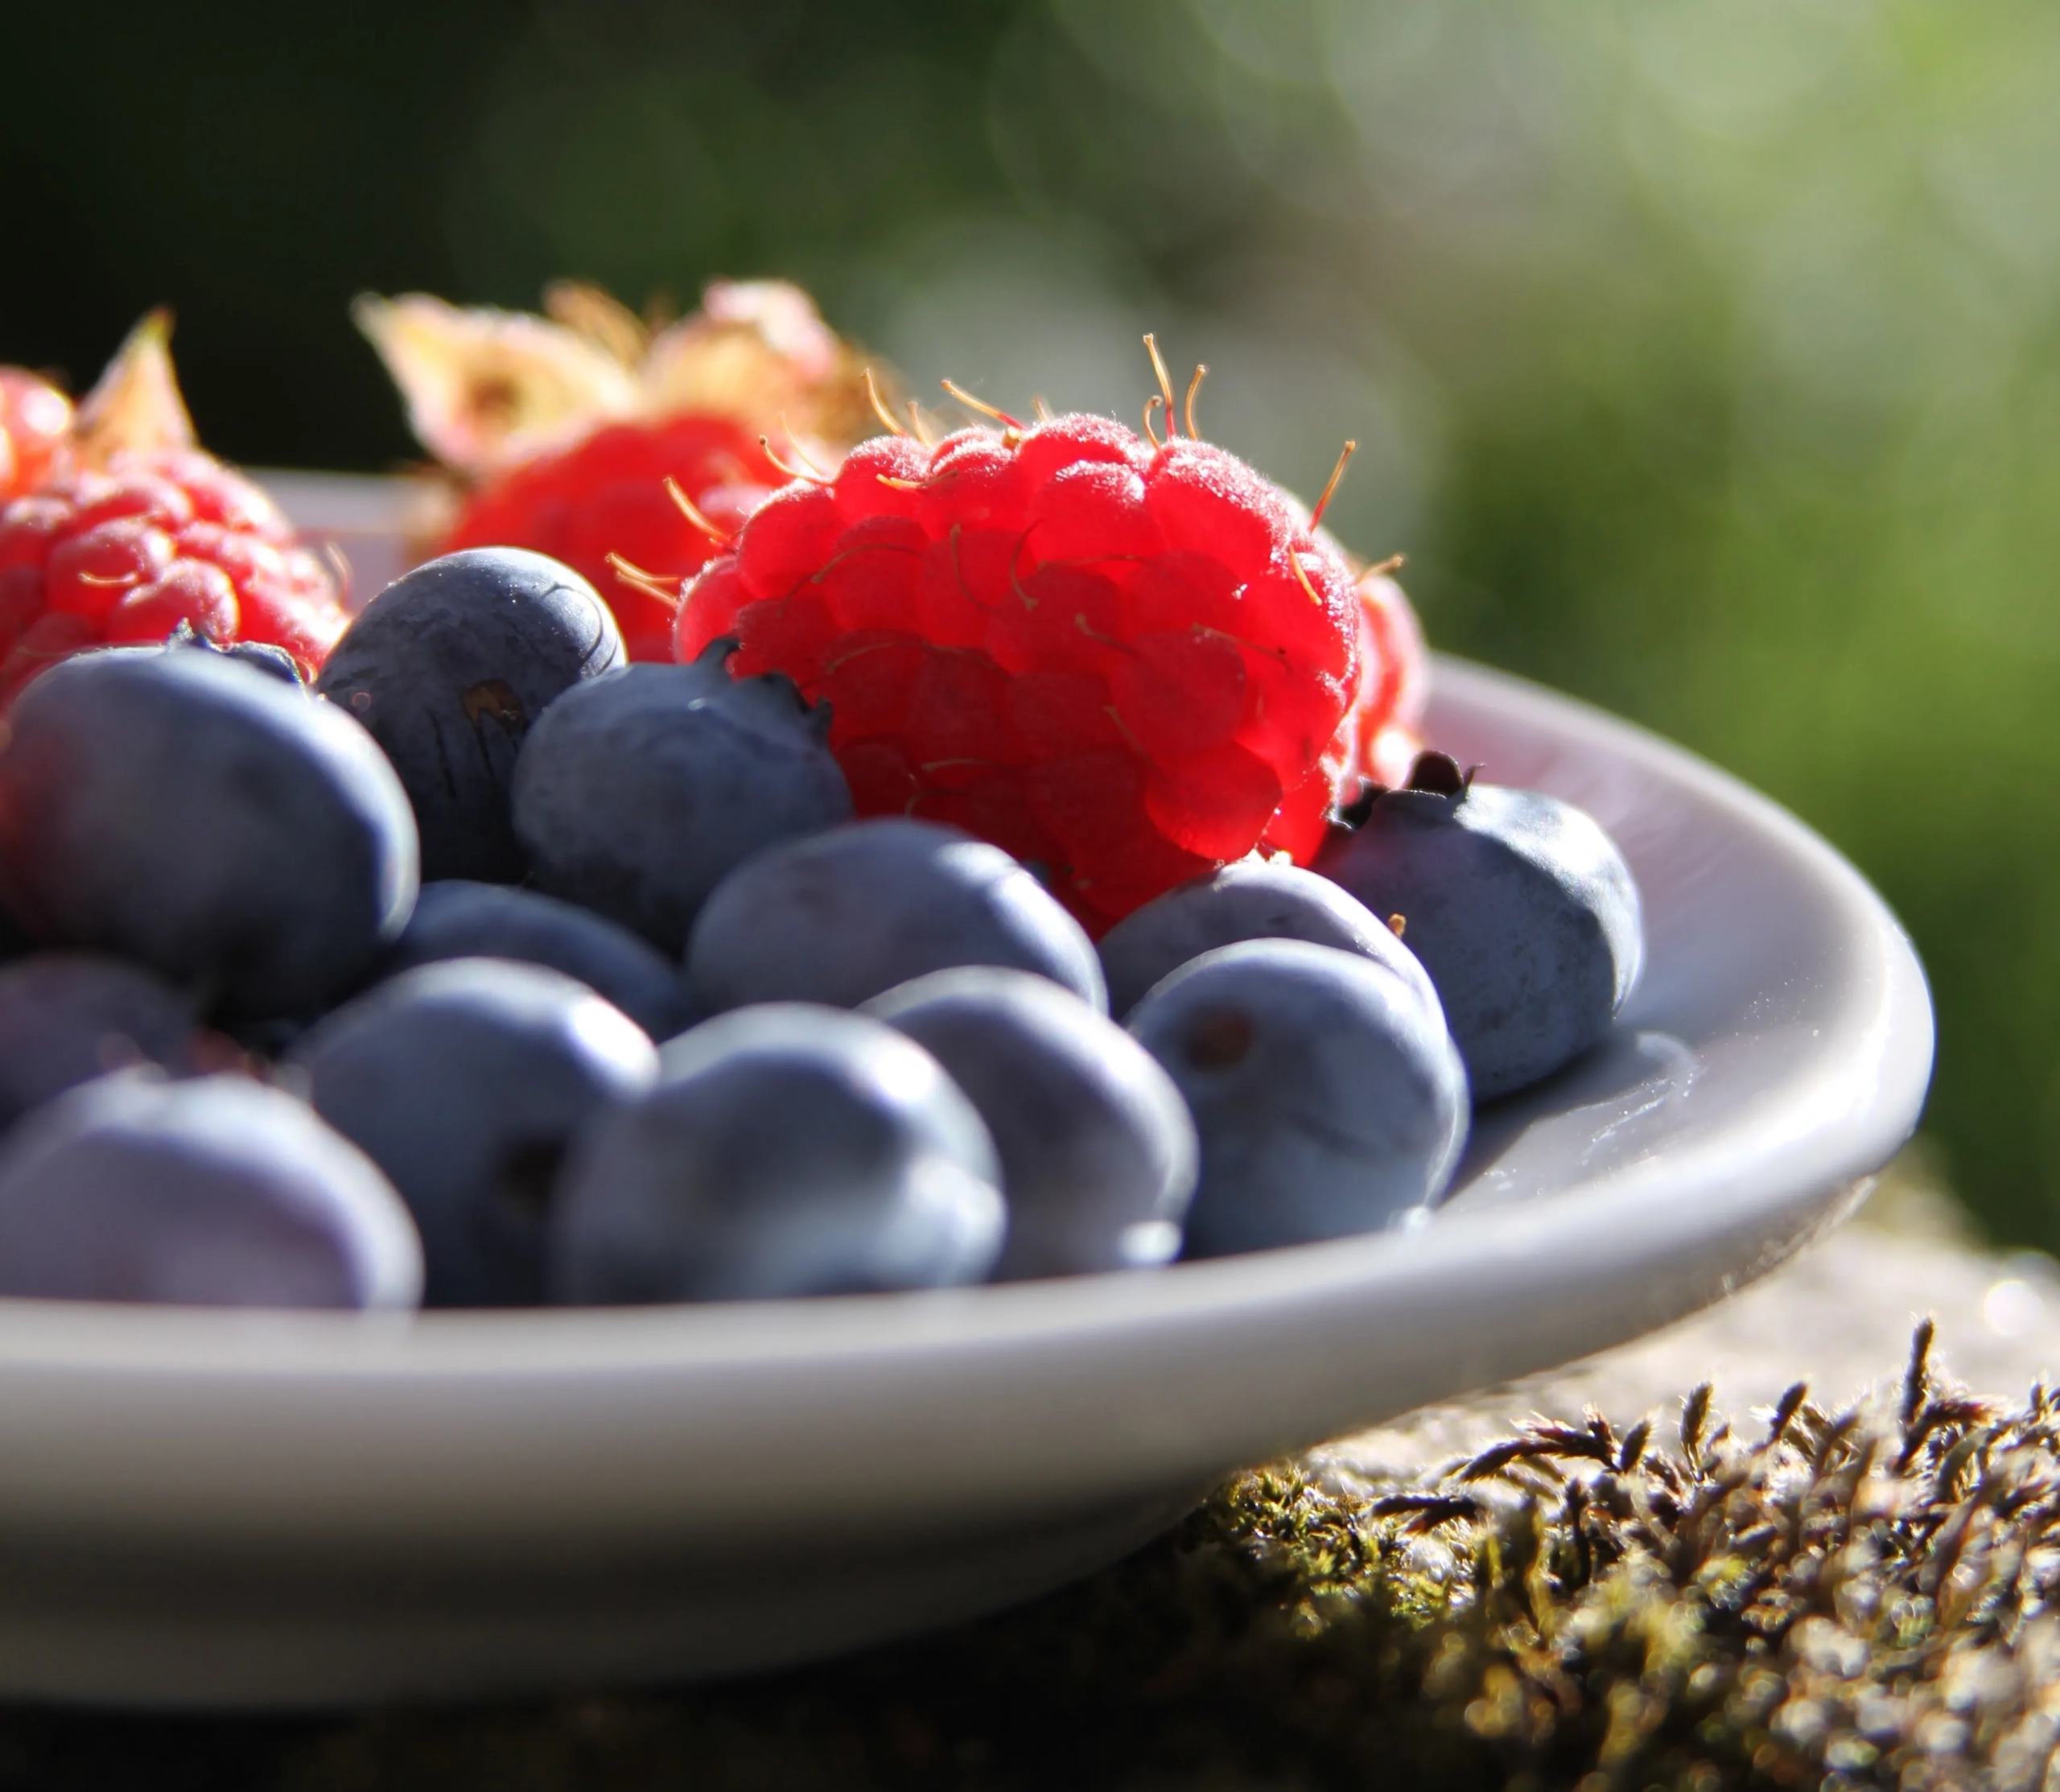 Bowl of blueberries and raspberries